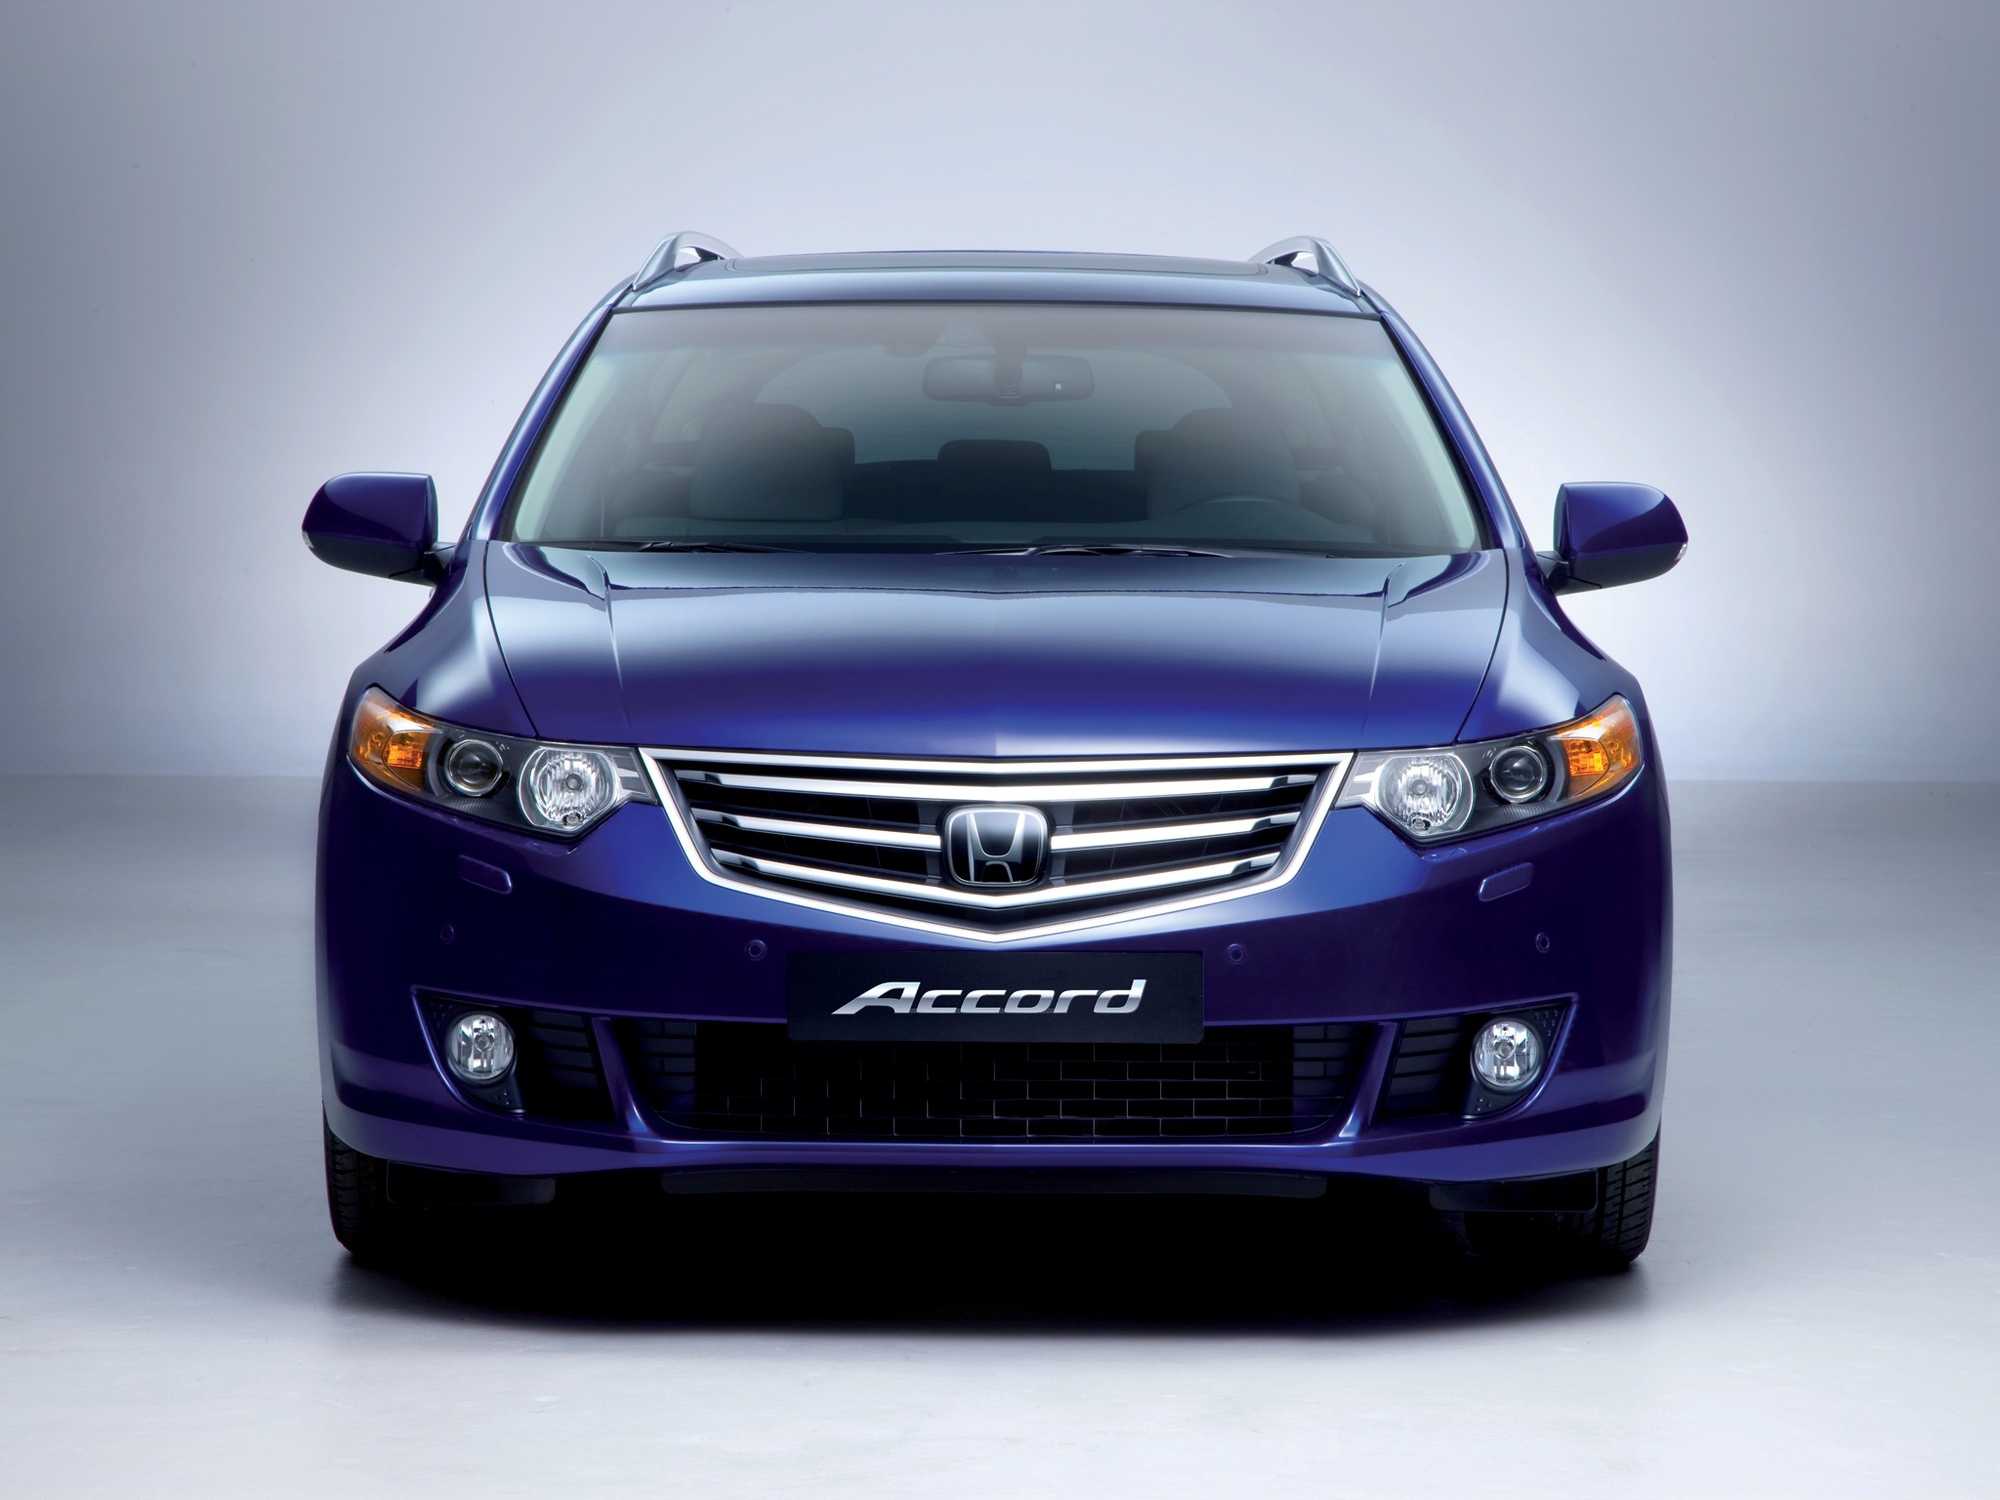 Honda accord (япония и европа восьмого поколения) - honda accord (japan and europe eighth generation) - abcdef.wiki